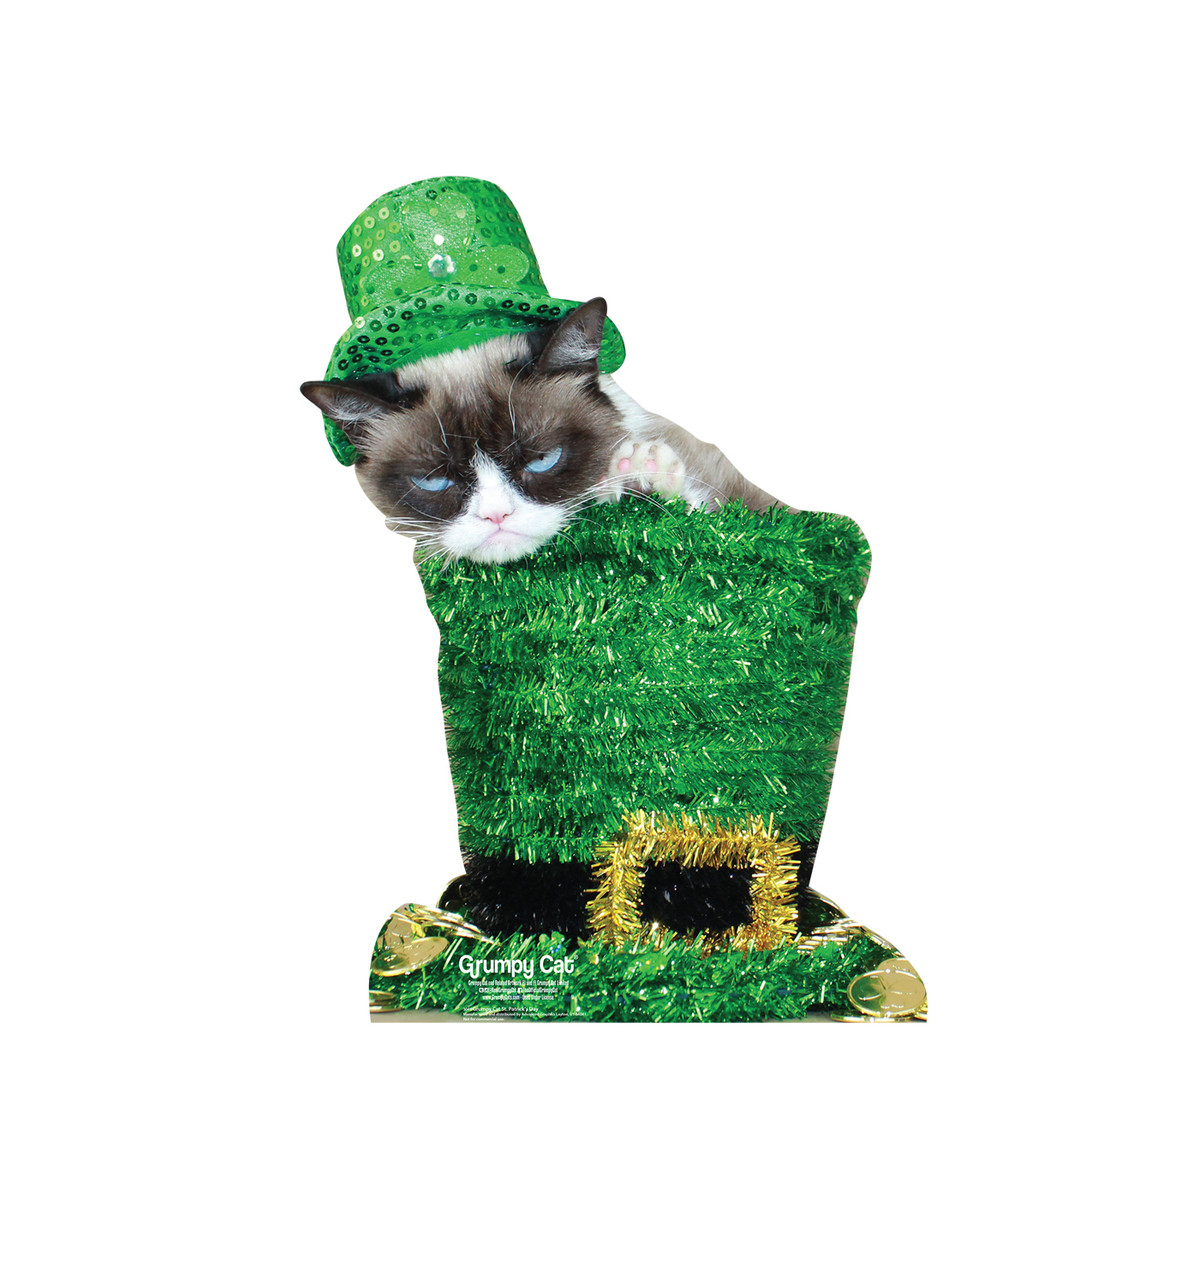 Life-Size Grumpy Cat St. Patrick's Day Cardboard Cutout